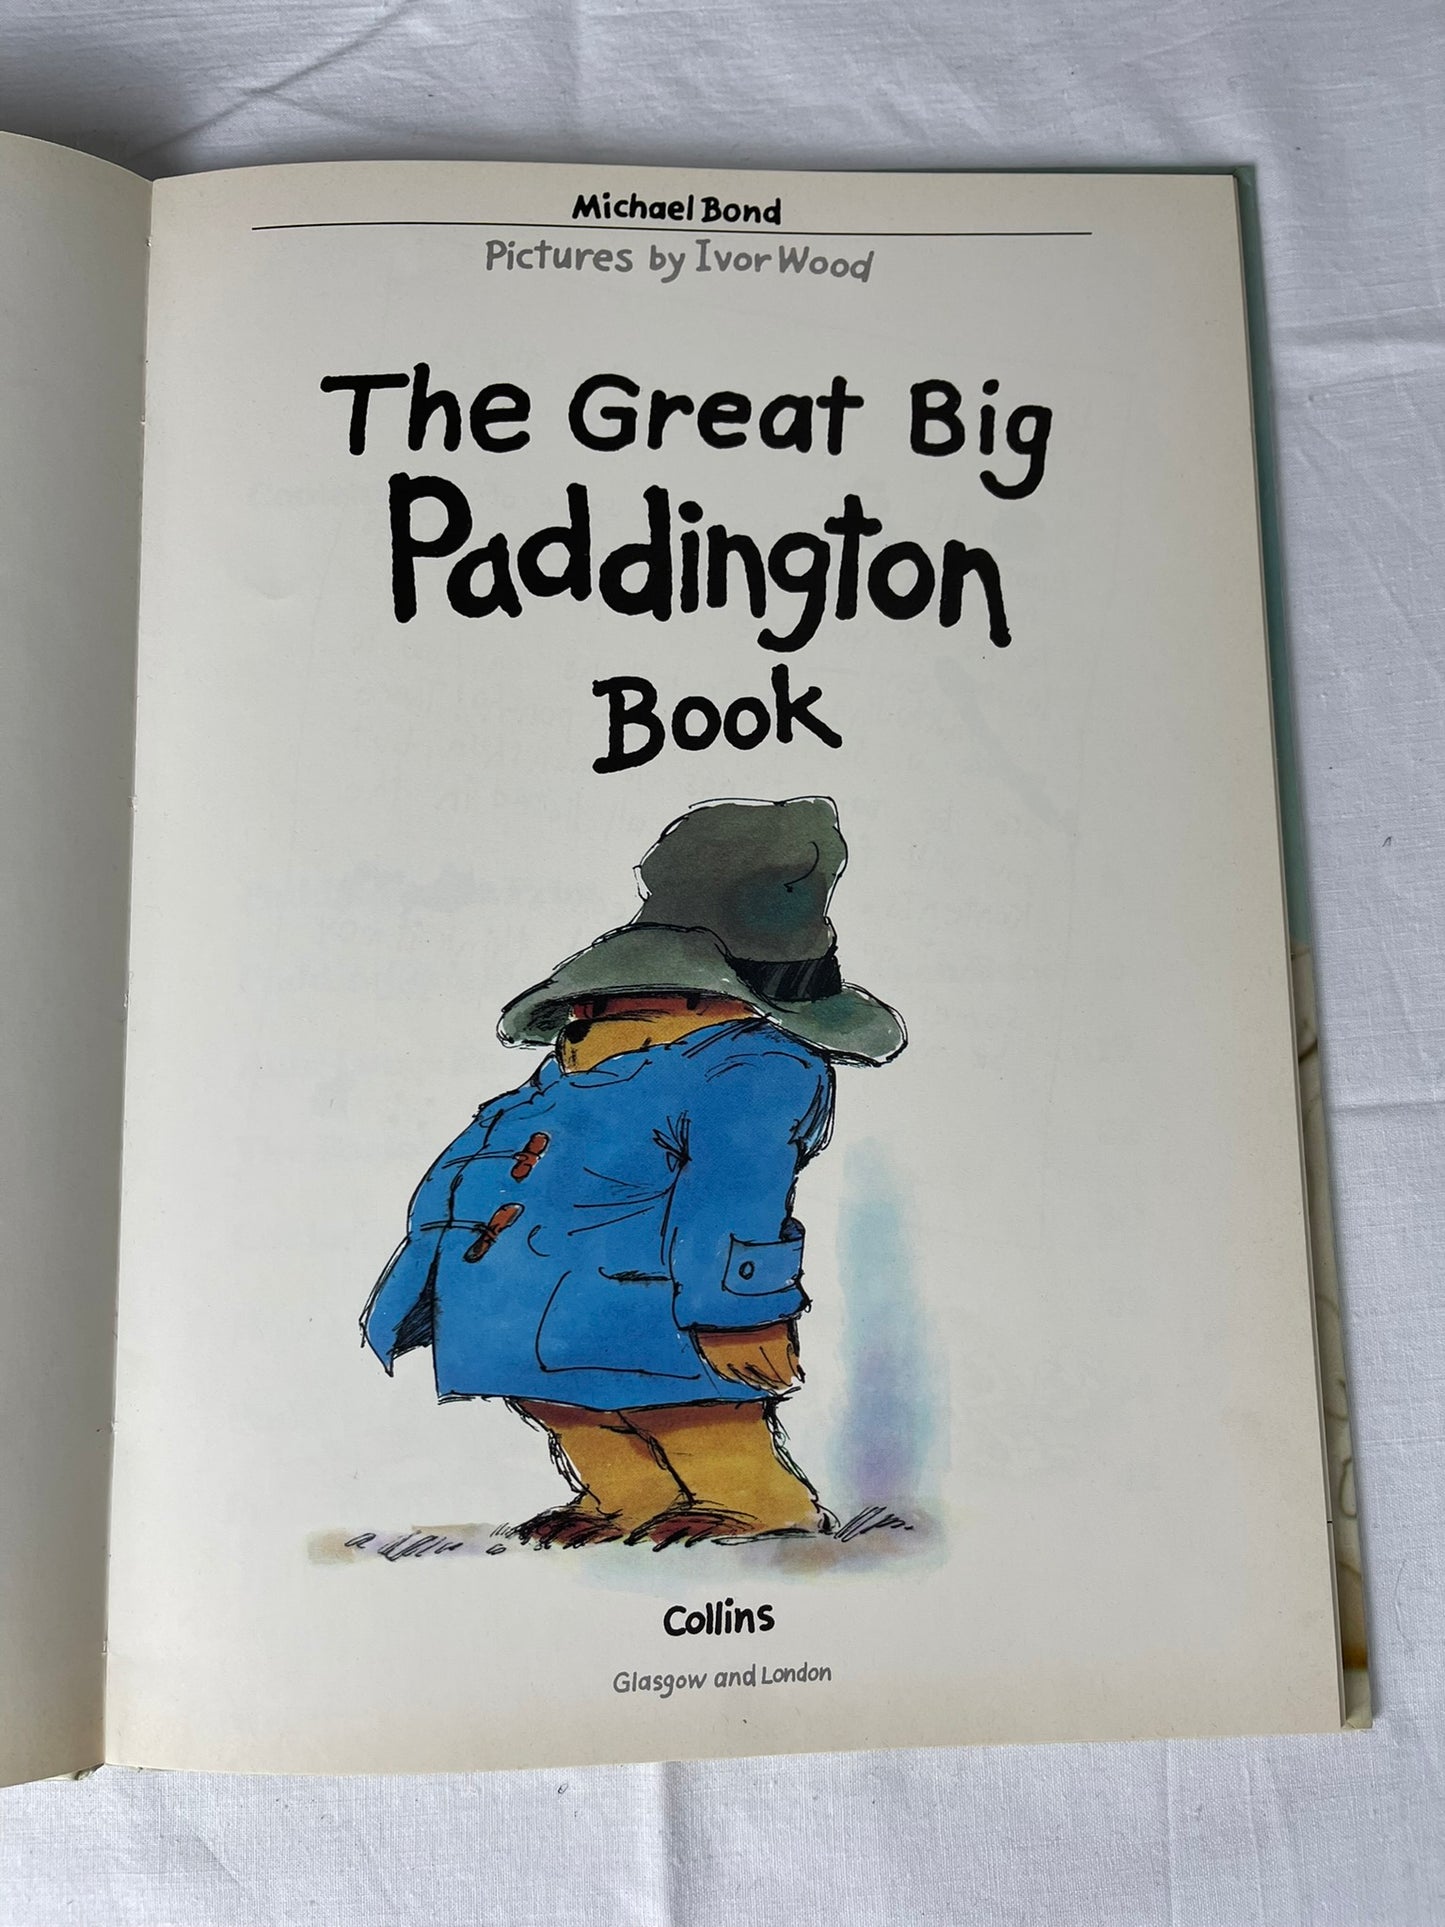 The Great Big Paddington Book by Michael Bond